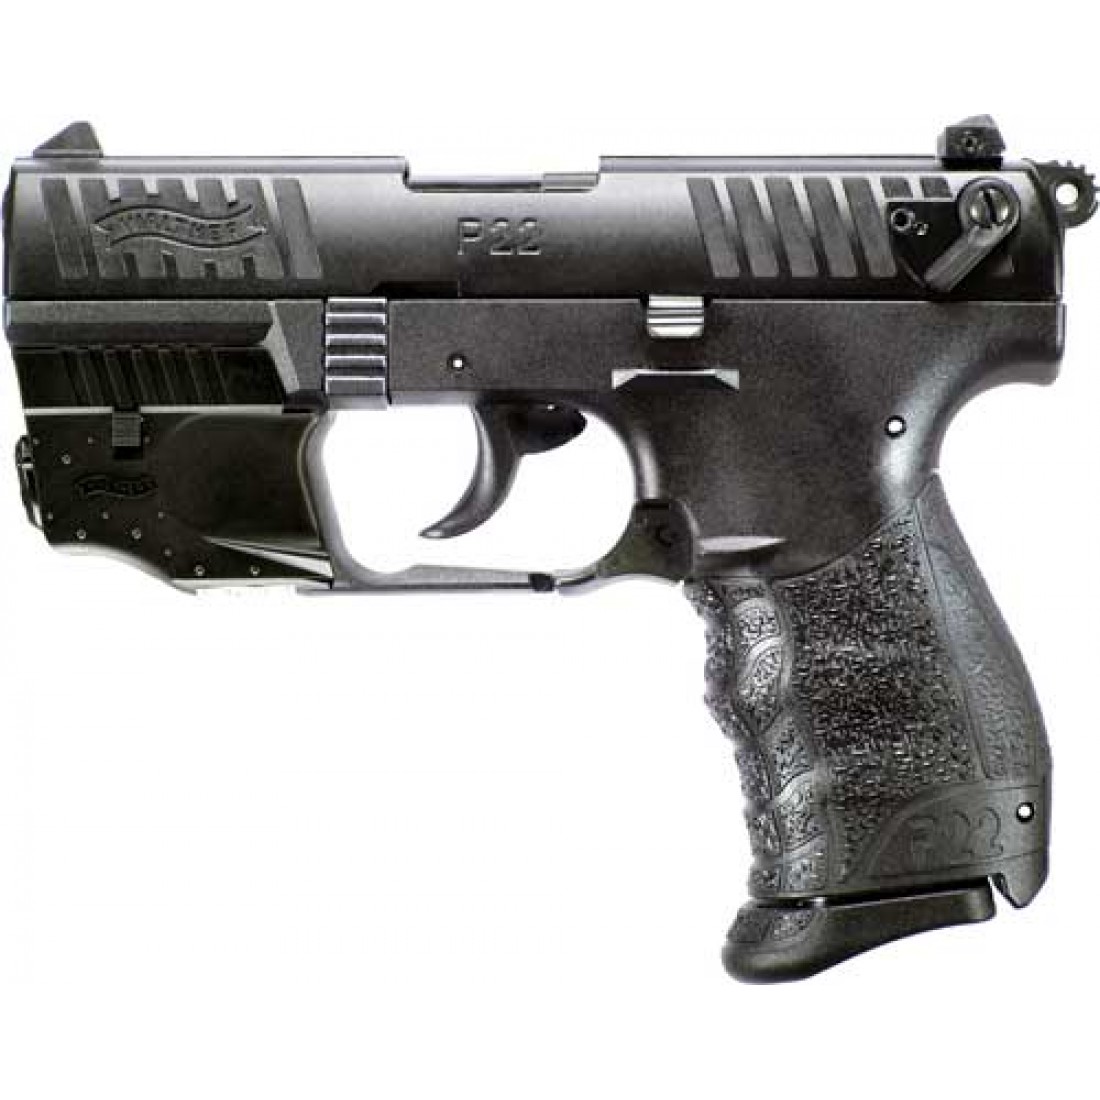 laser sight for walther p22 qd 22lr rimfire pistol